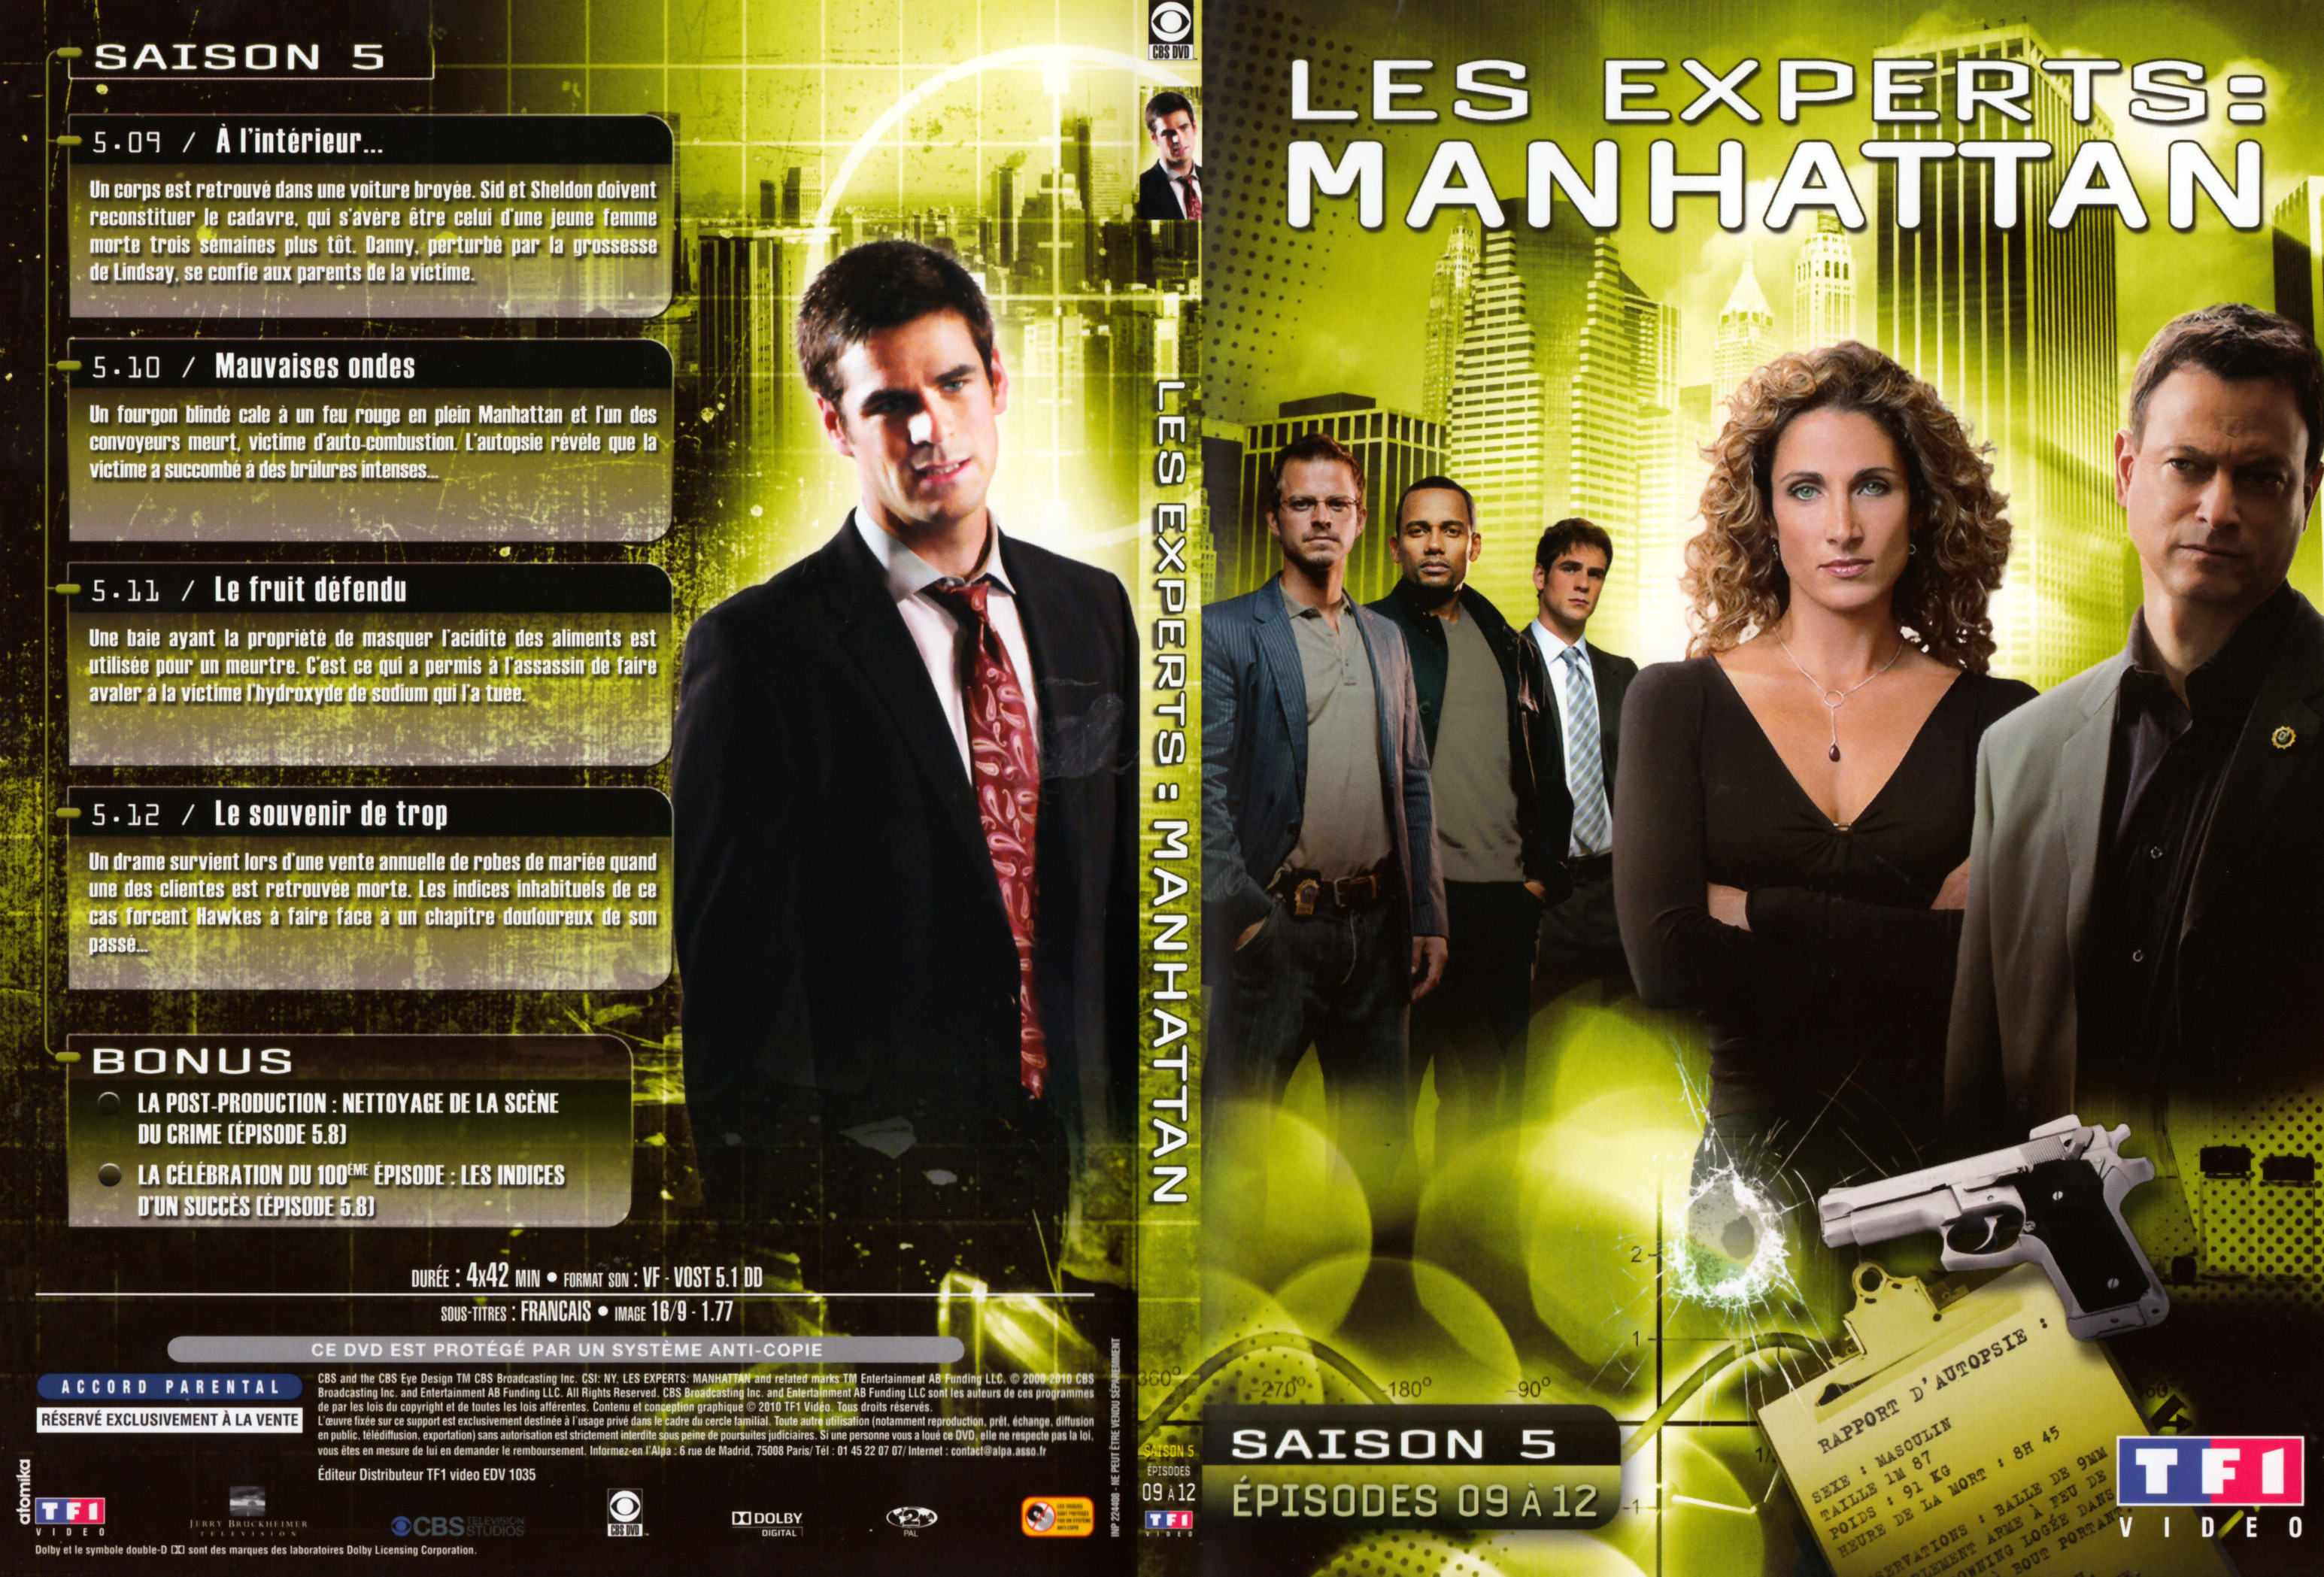 Jaquette DVD Les Experts Manhattan Saison 5 DVD 3